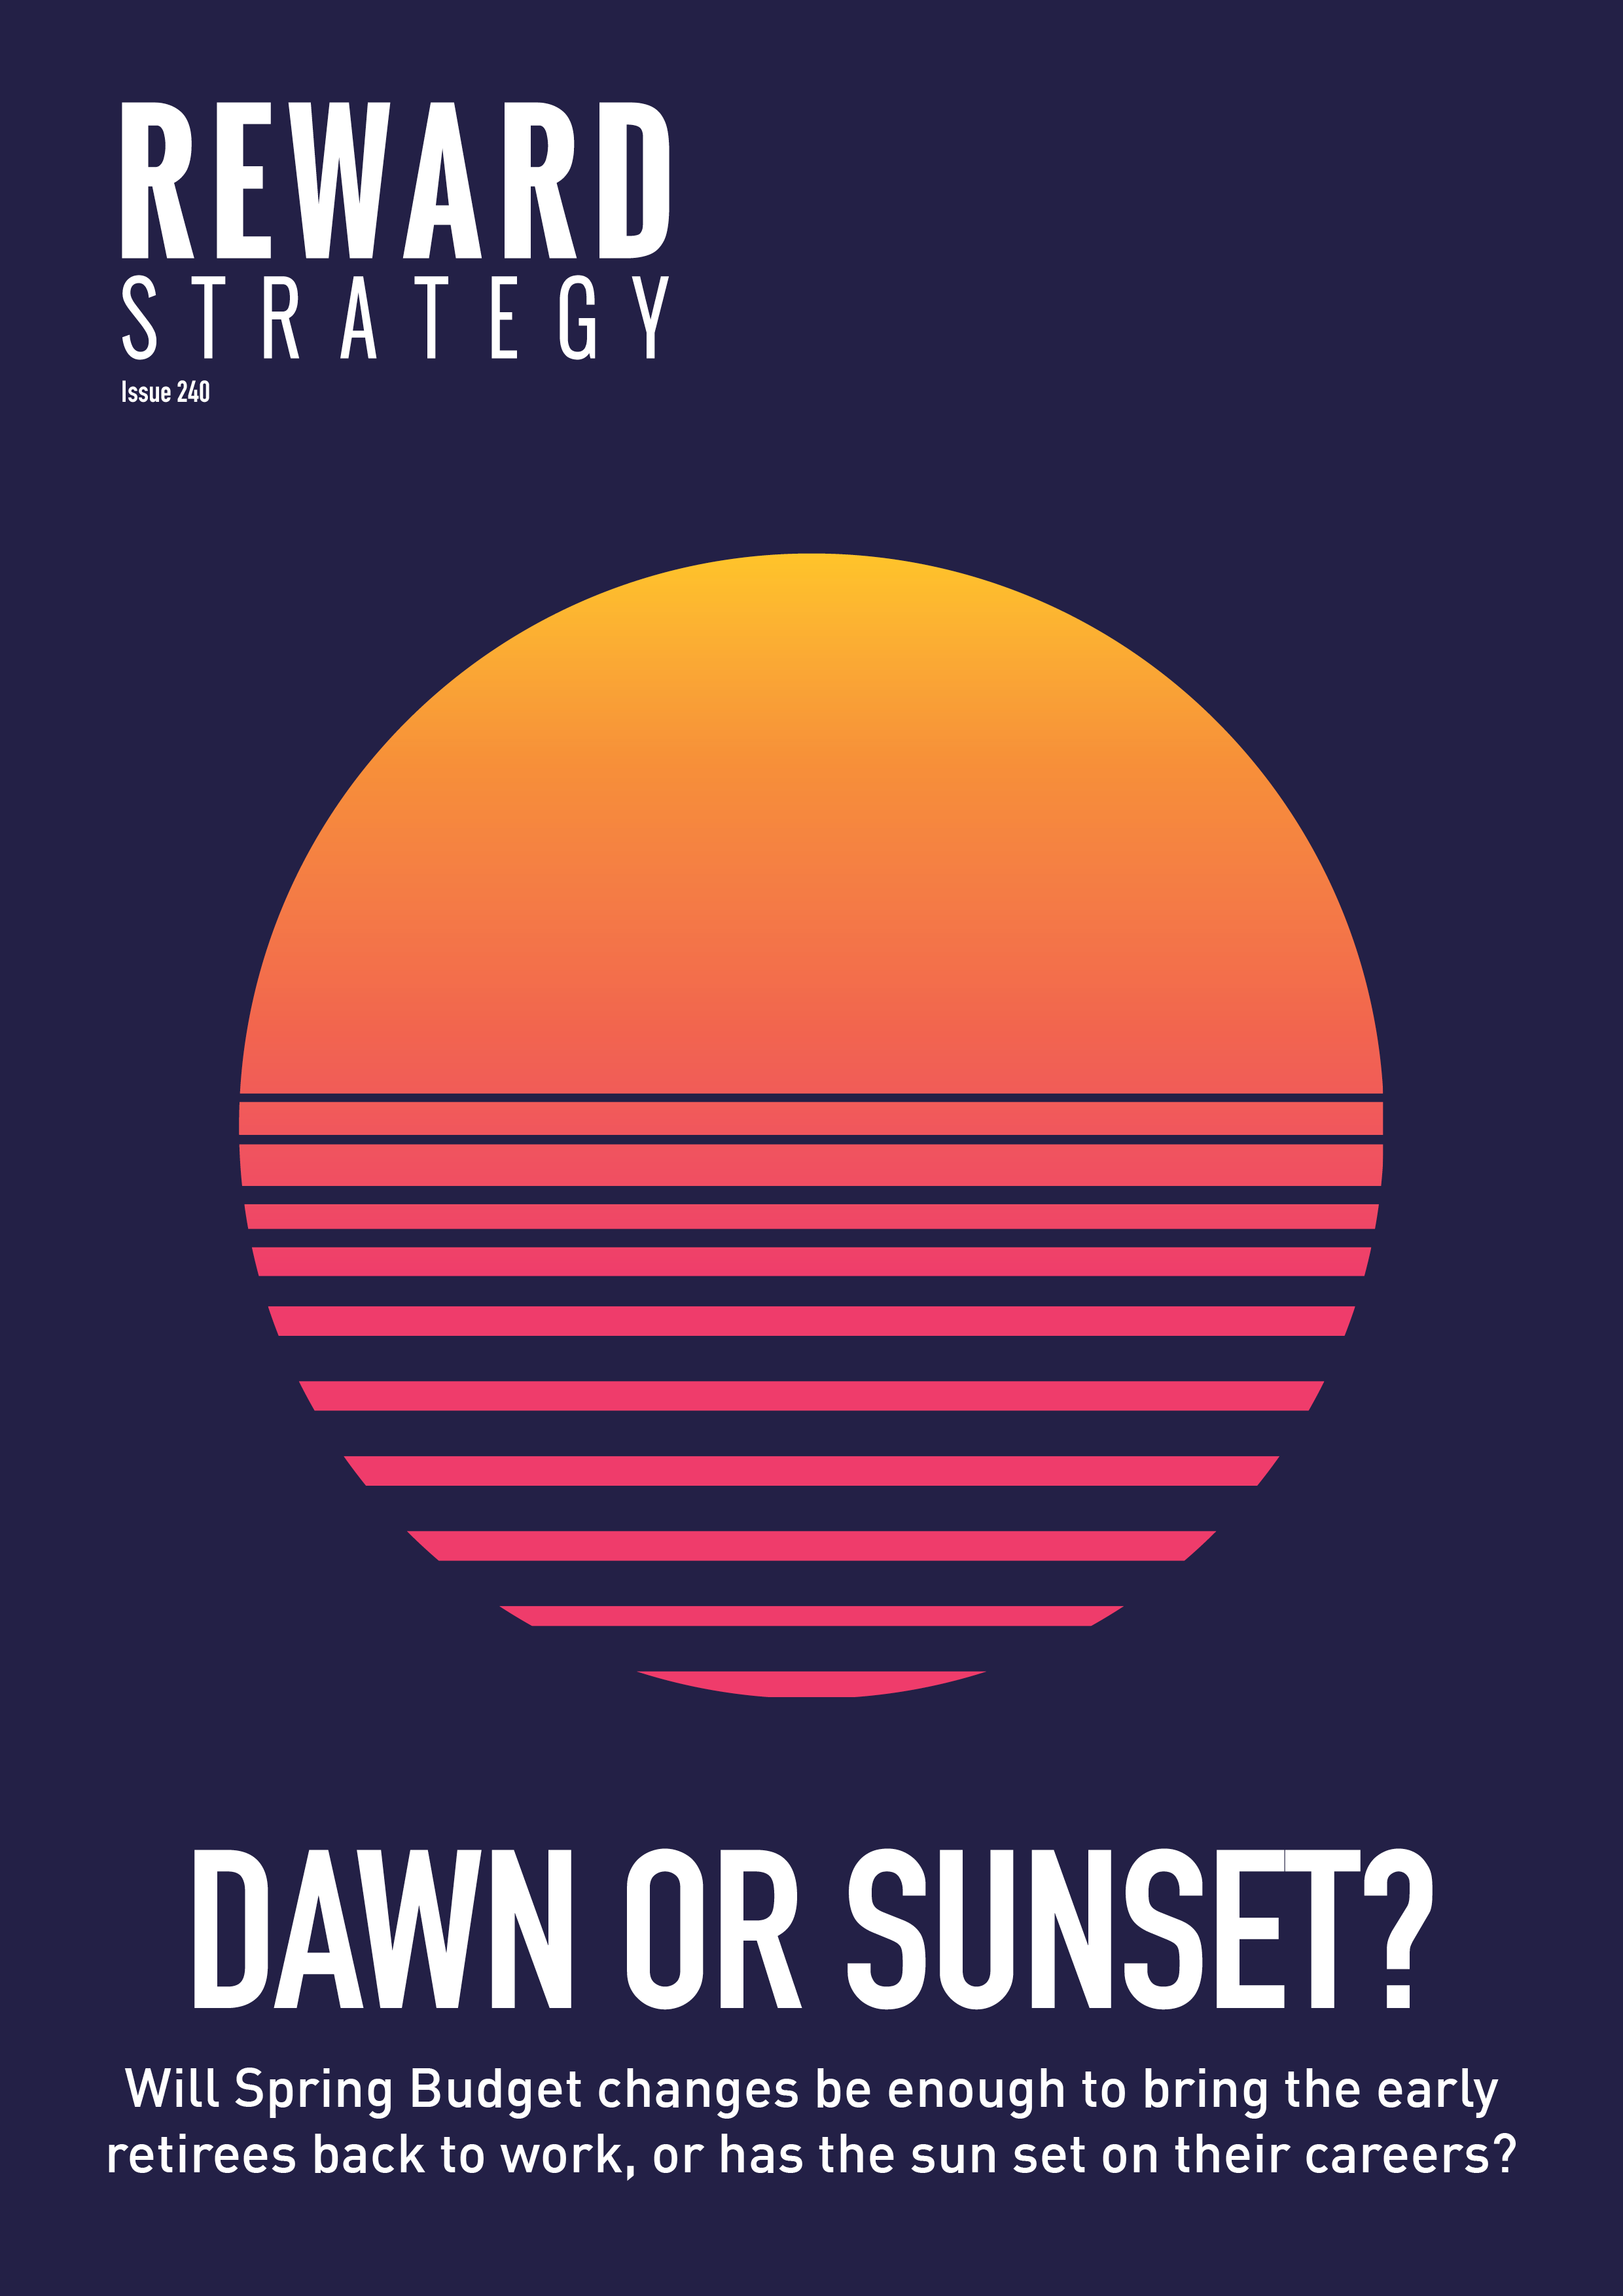 Dawn or sunset?